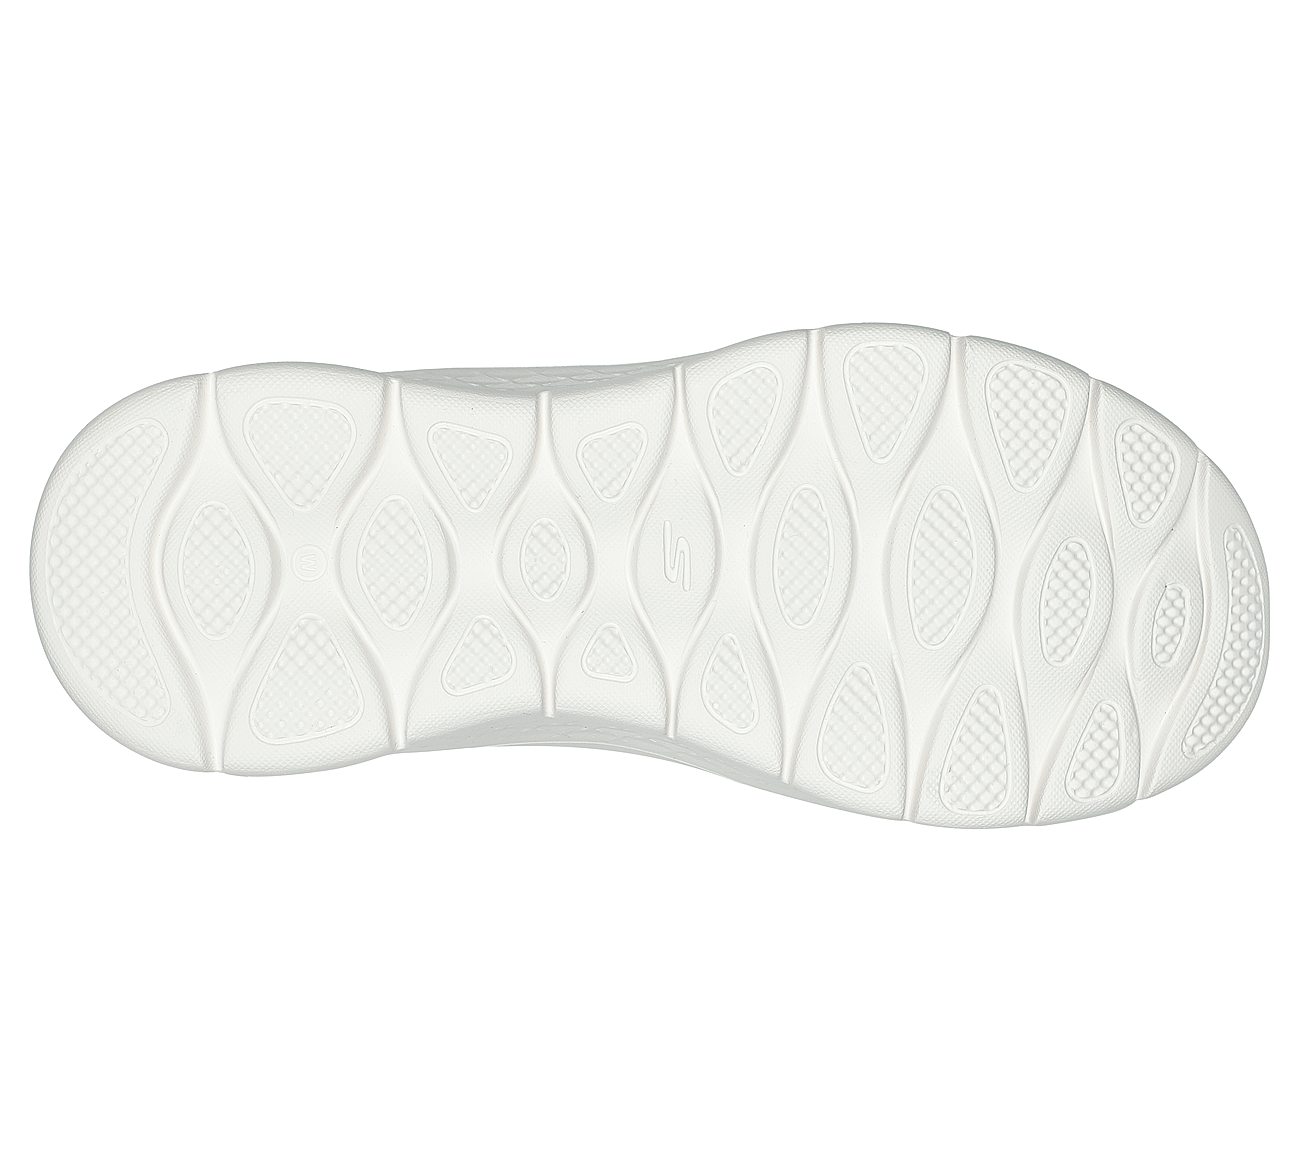 Skechers Grey Go Walk-Flex-Cleve Slip On Shoes For Women - Style ID ...